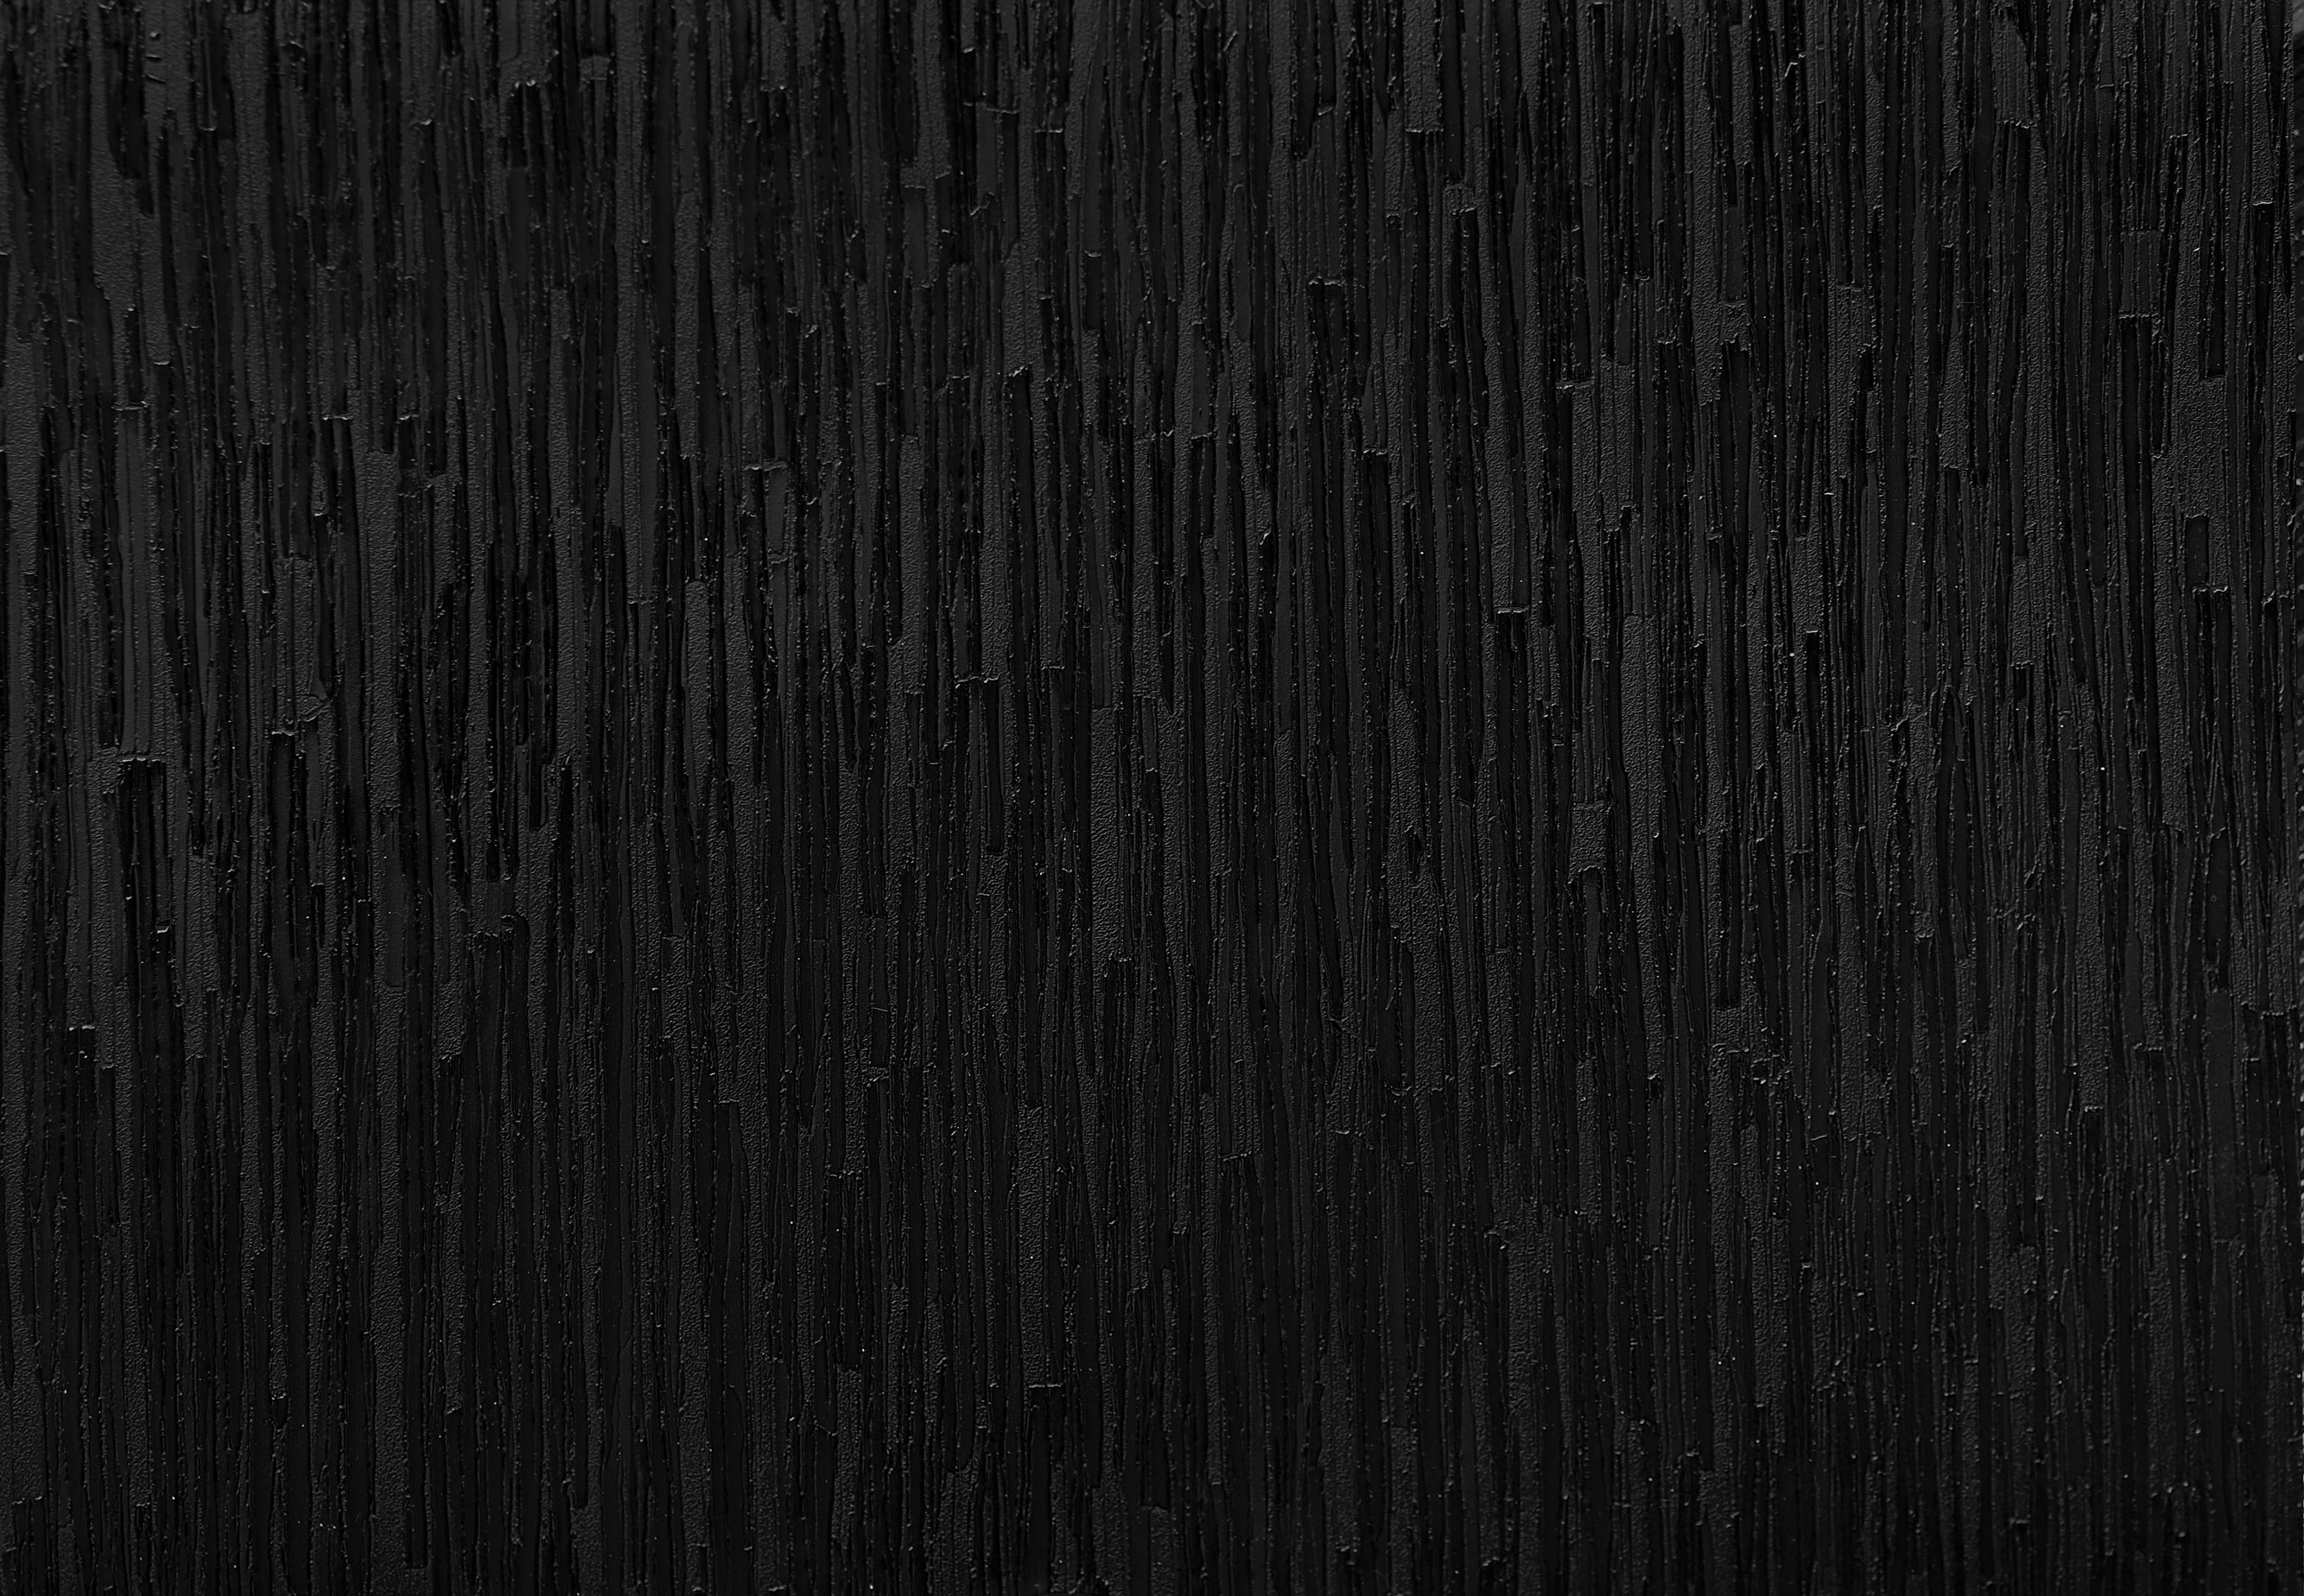 Пленка пвх черная. MBP 9233-3 пленка ПВХ FINEVINYL арт. MBP 9233-3_0.25 мм, шир. 1400 Мм. Черный дуб текстура. Дуб черный пленка ПВХ. Скол дуба черный.